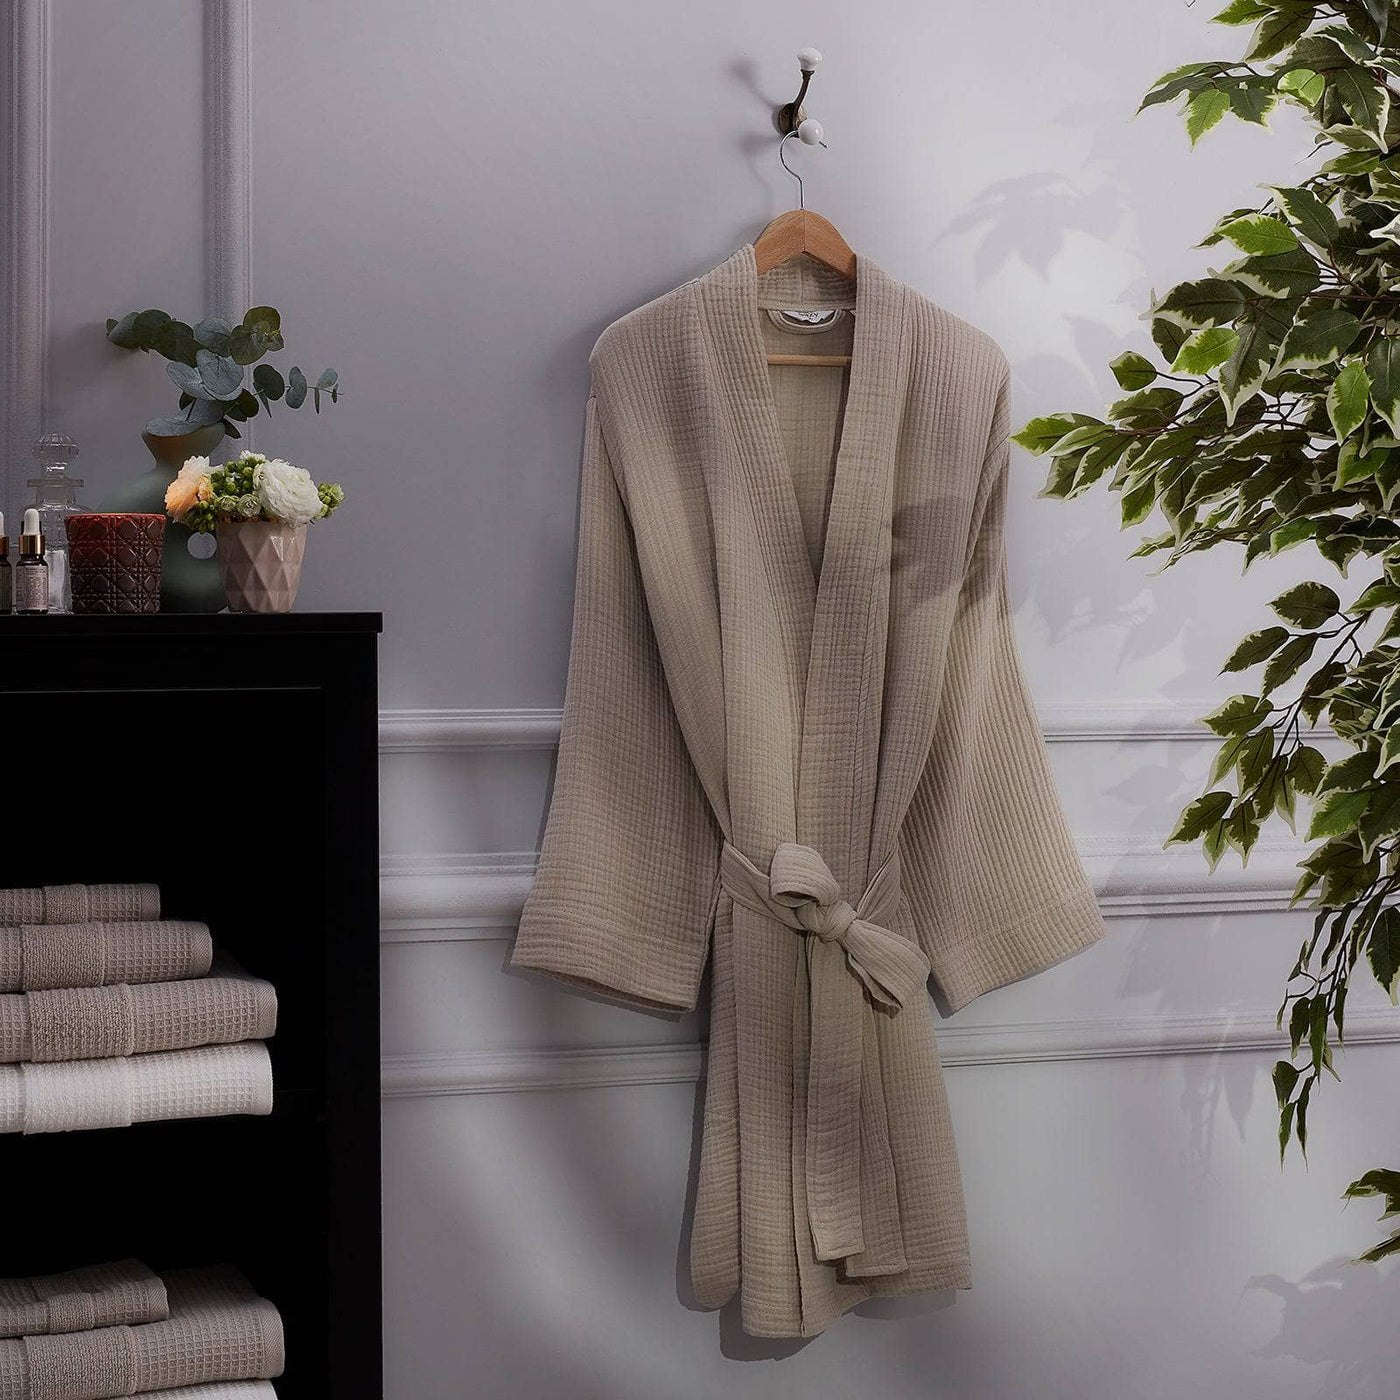 Rika Unisex 100% Turkish Cotton Dressing Gown, Stone Grey, XL Dressing Gowns sazy.com